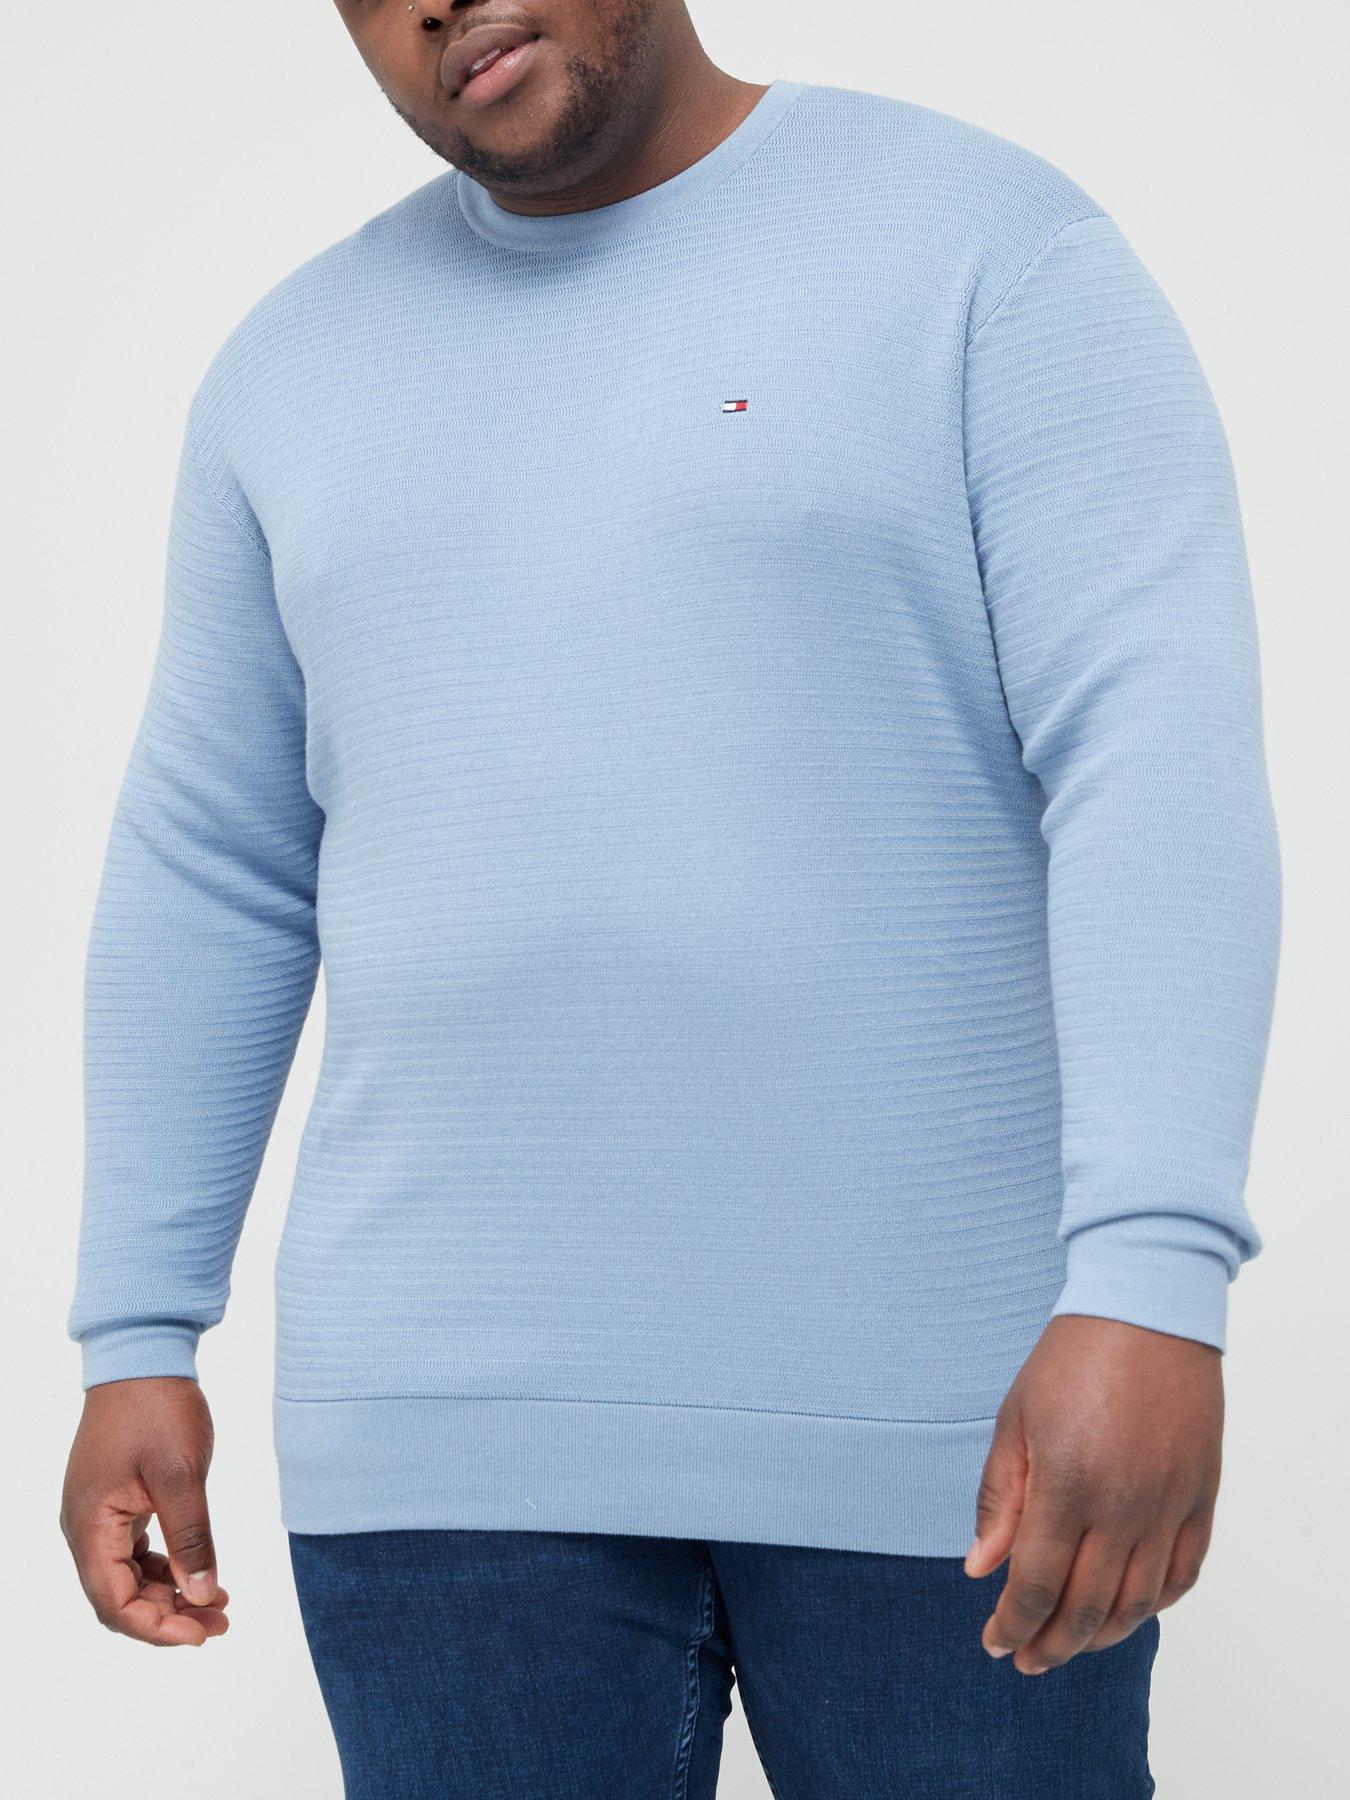 Details about   Tommy Hilfiger Men's Rugby Crewneck Sweater Choose SZ/color